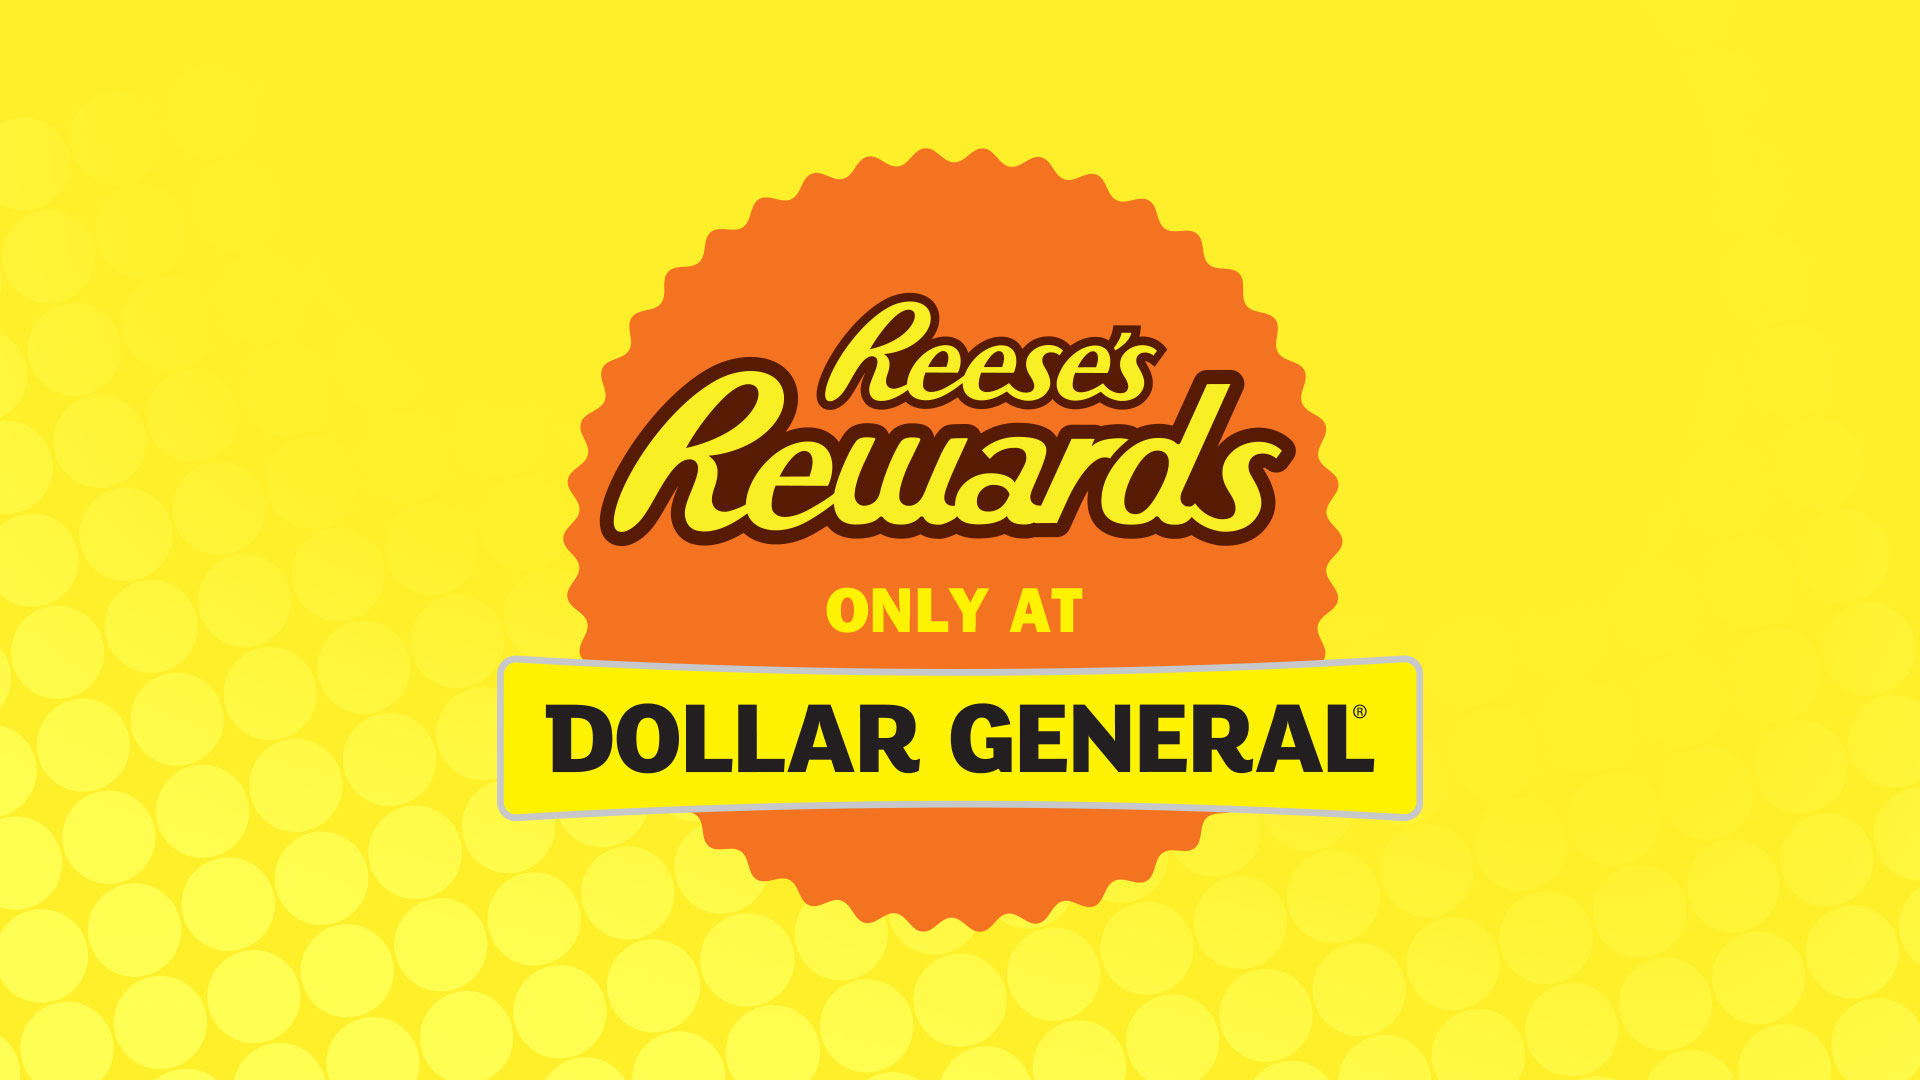 REESE'S Rewards at Dollar General